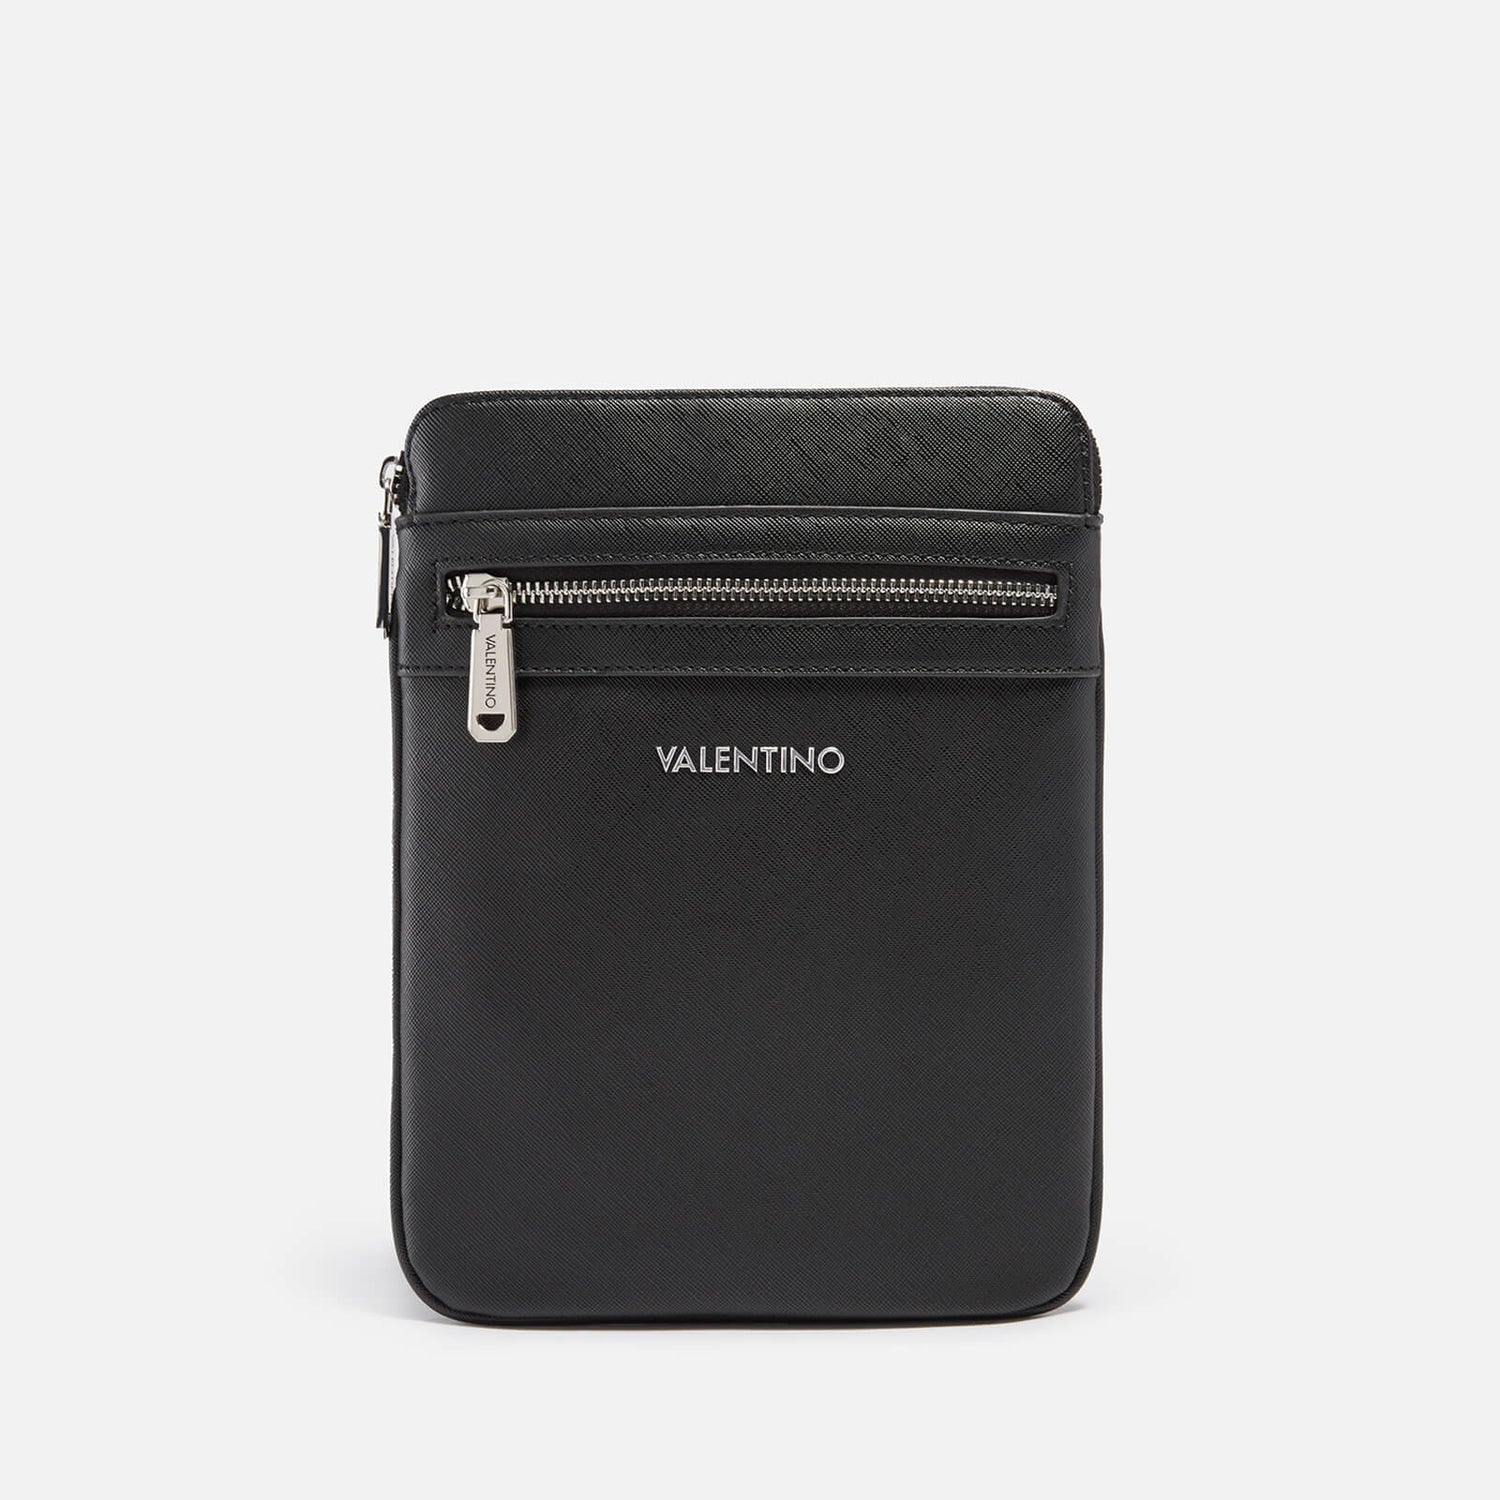 Valentino Men's Marnier Small Cross Body Bag - Black